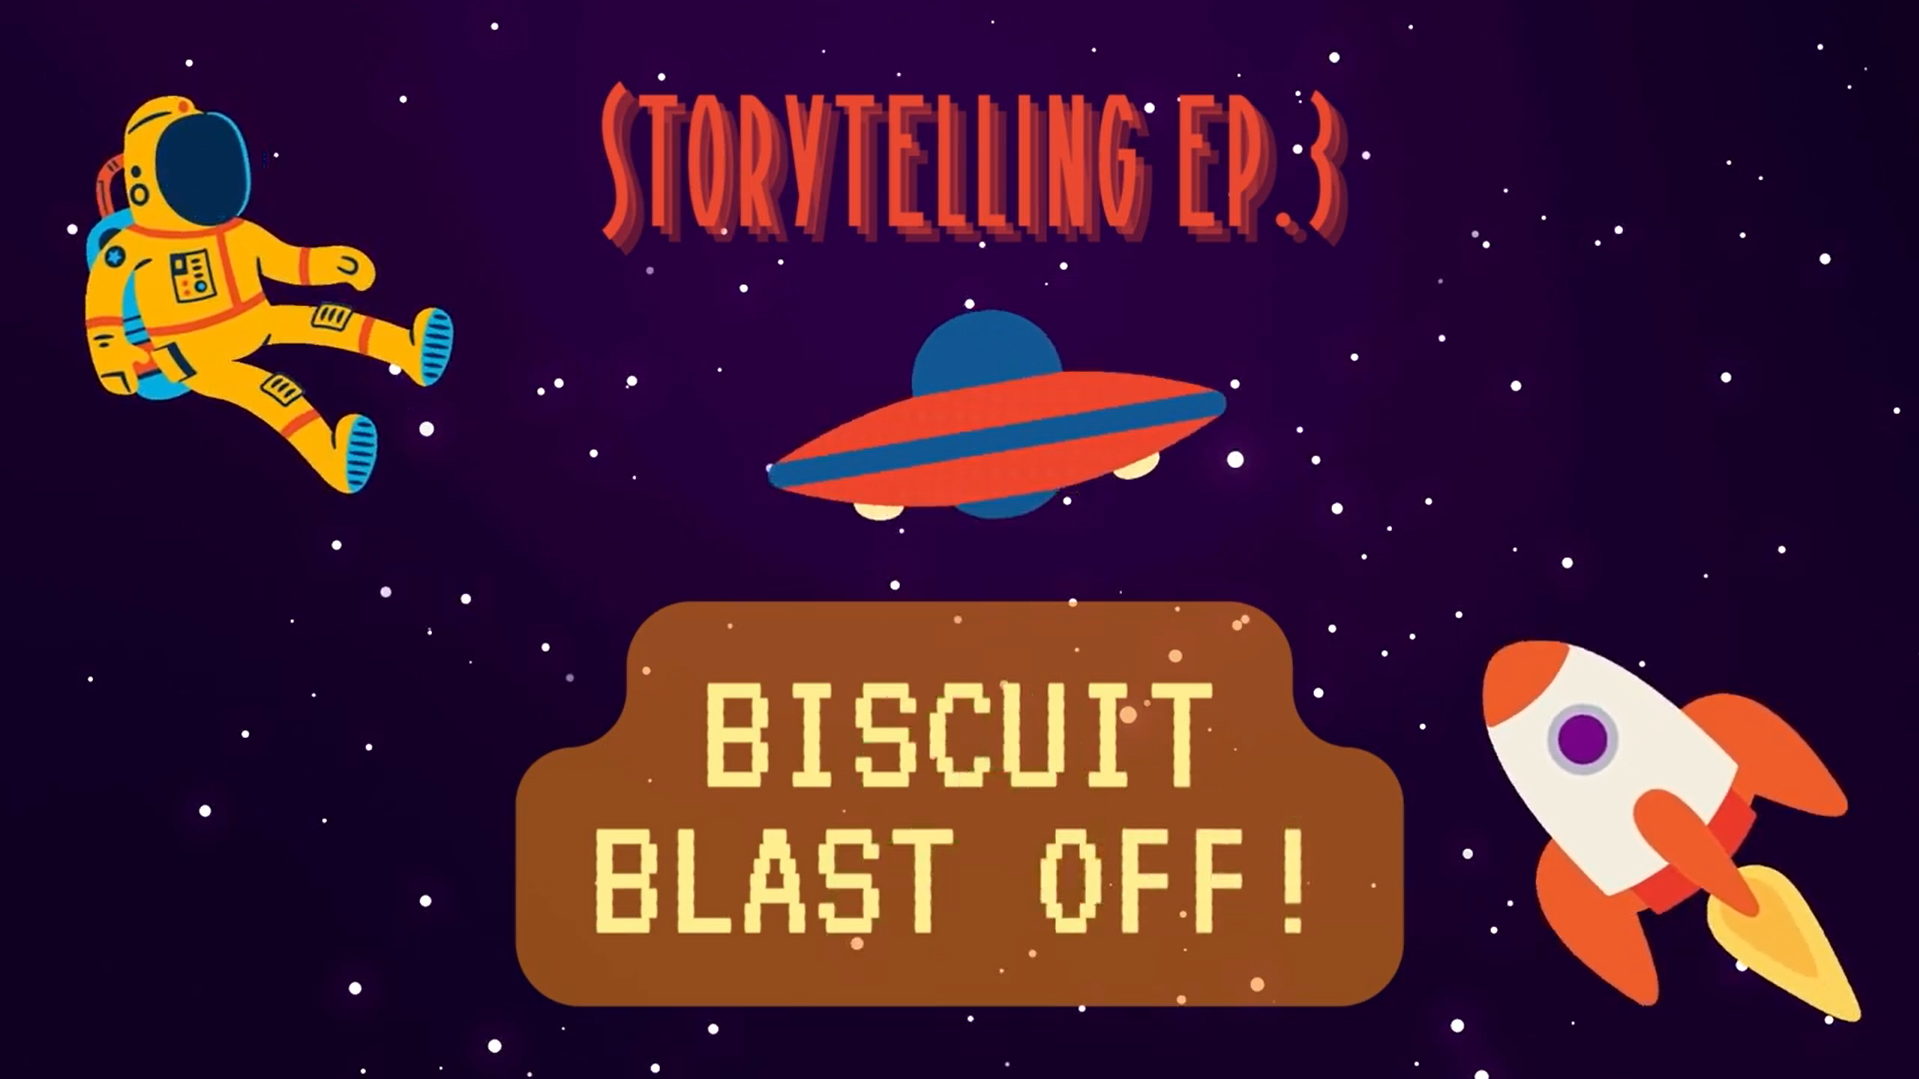 Storytelling EP.3 “Biscuit Blast Off!” 🚀🛸